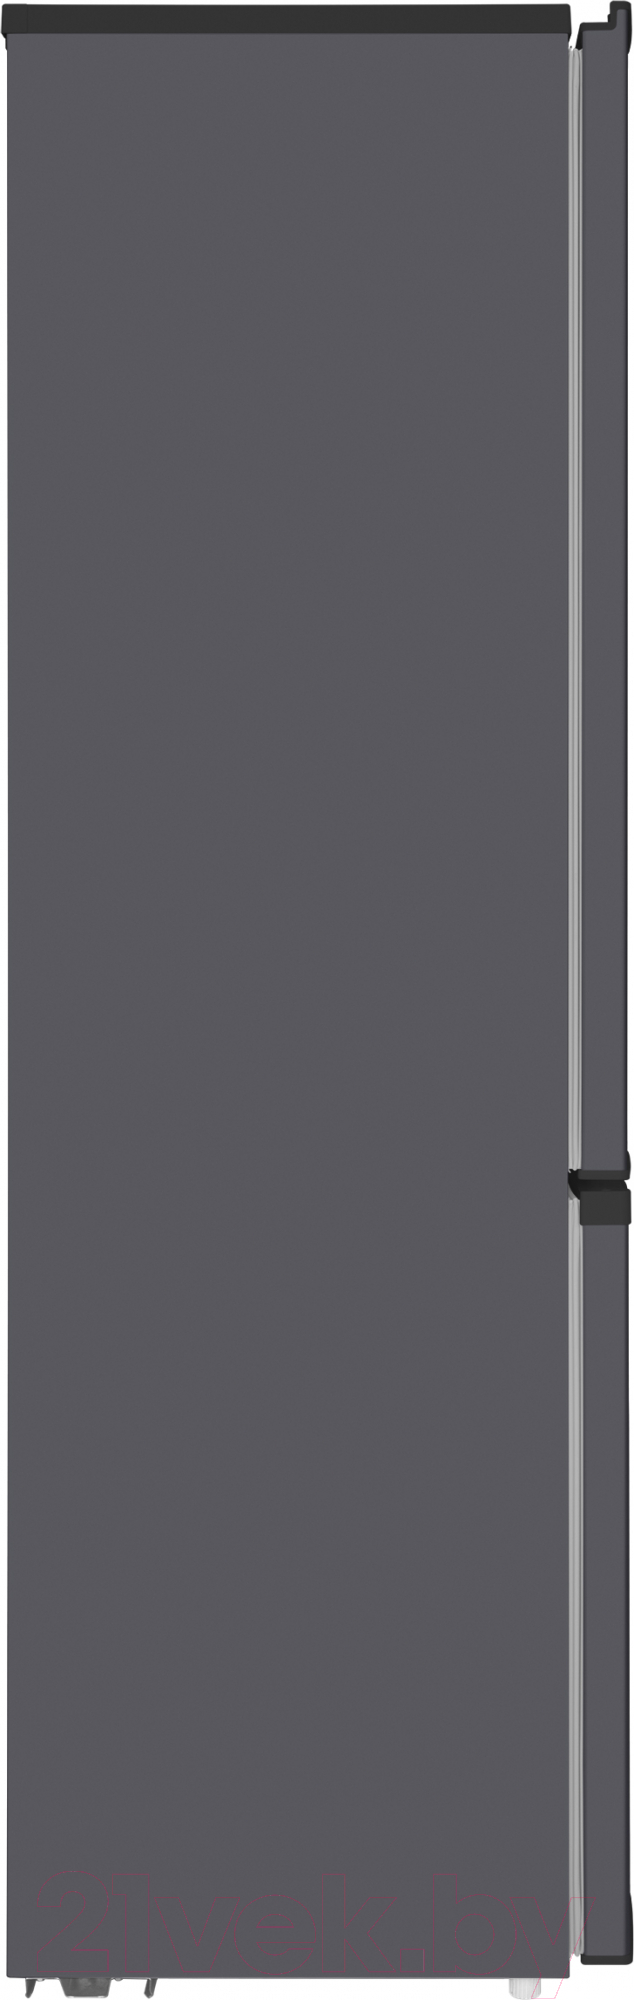 Холодильник с морозильником Maunfeld MFF176M11